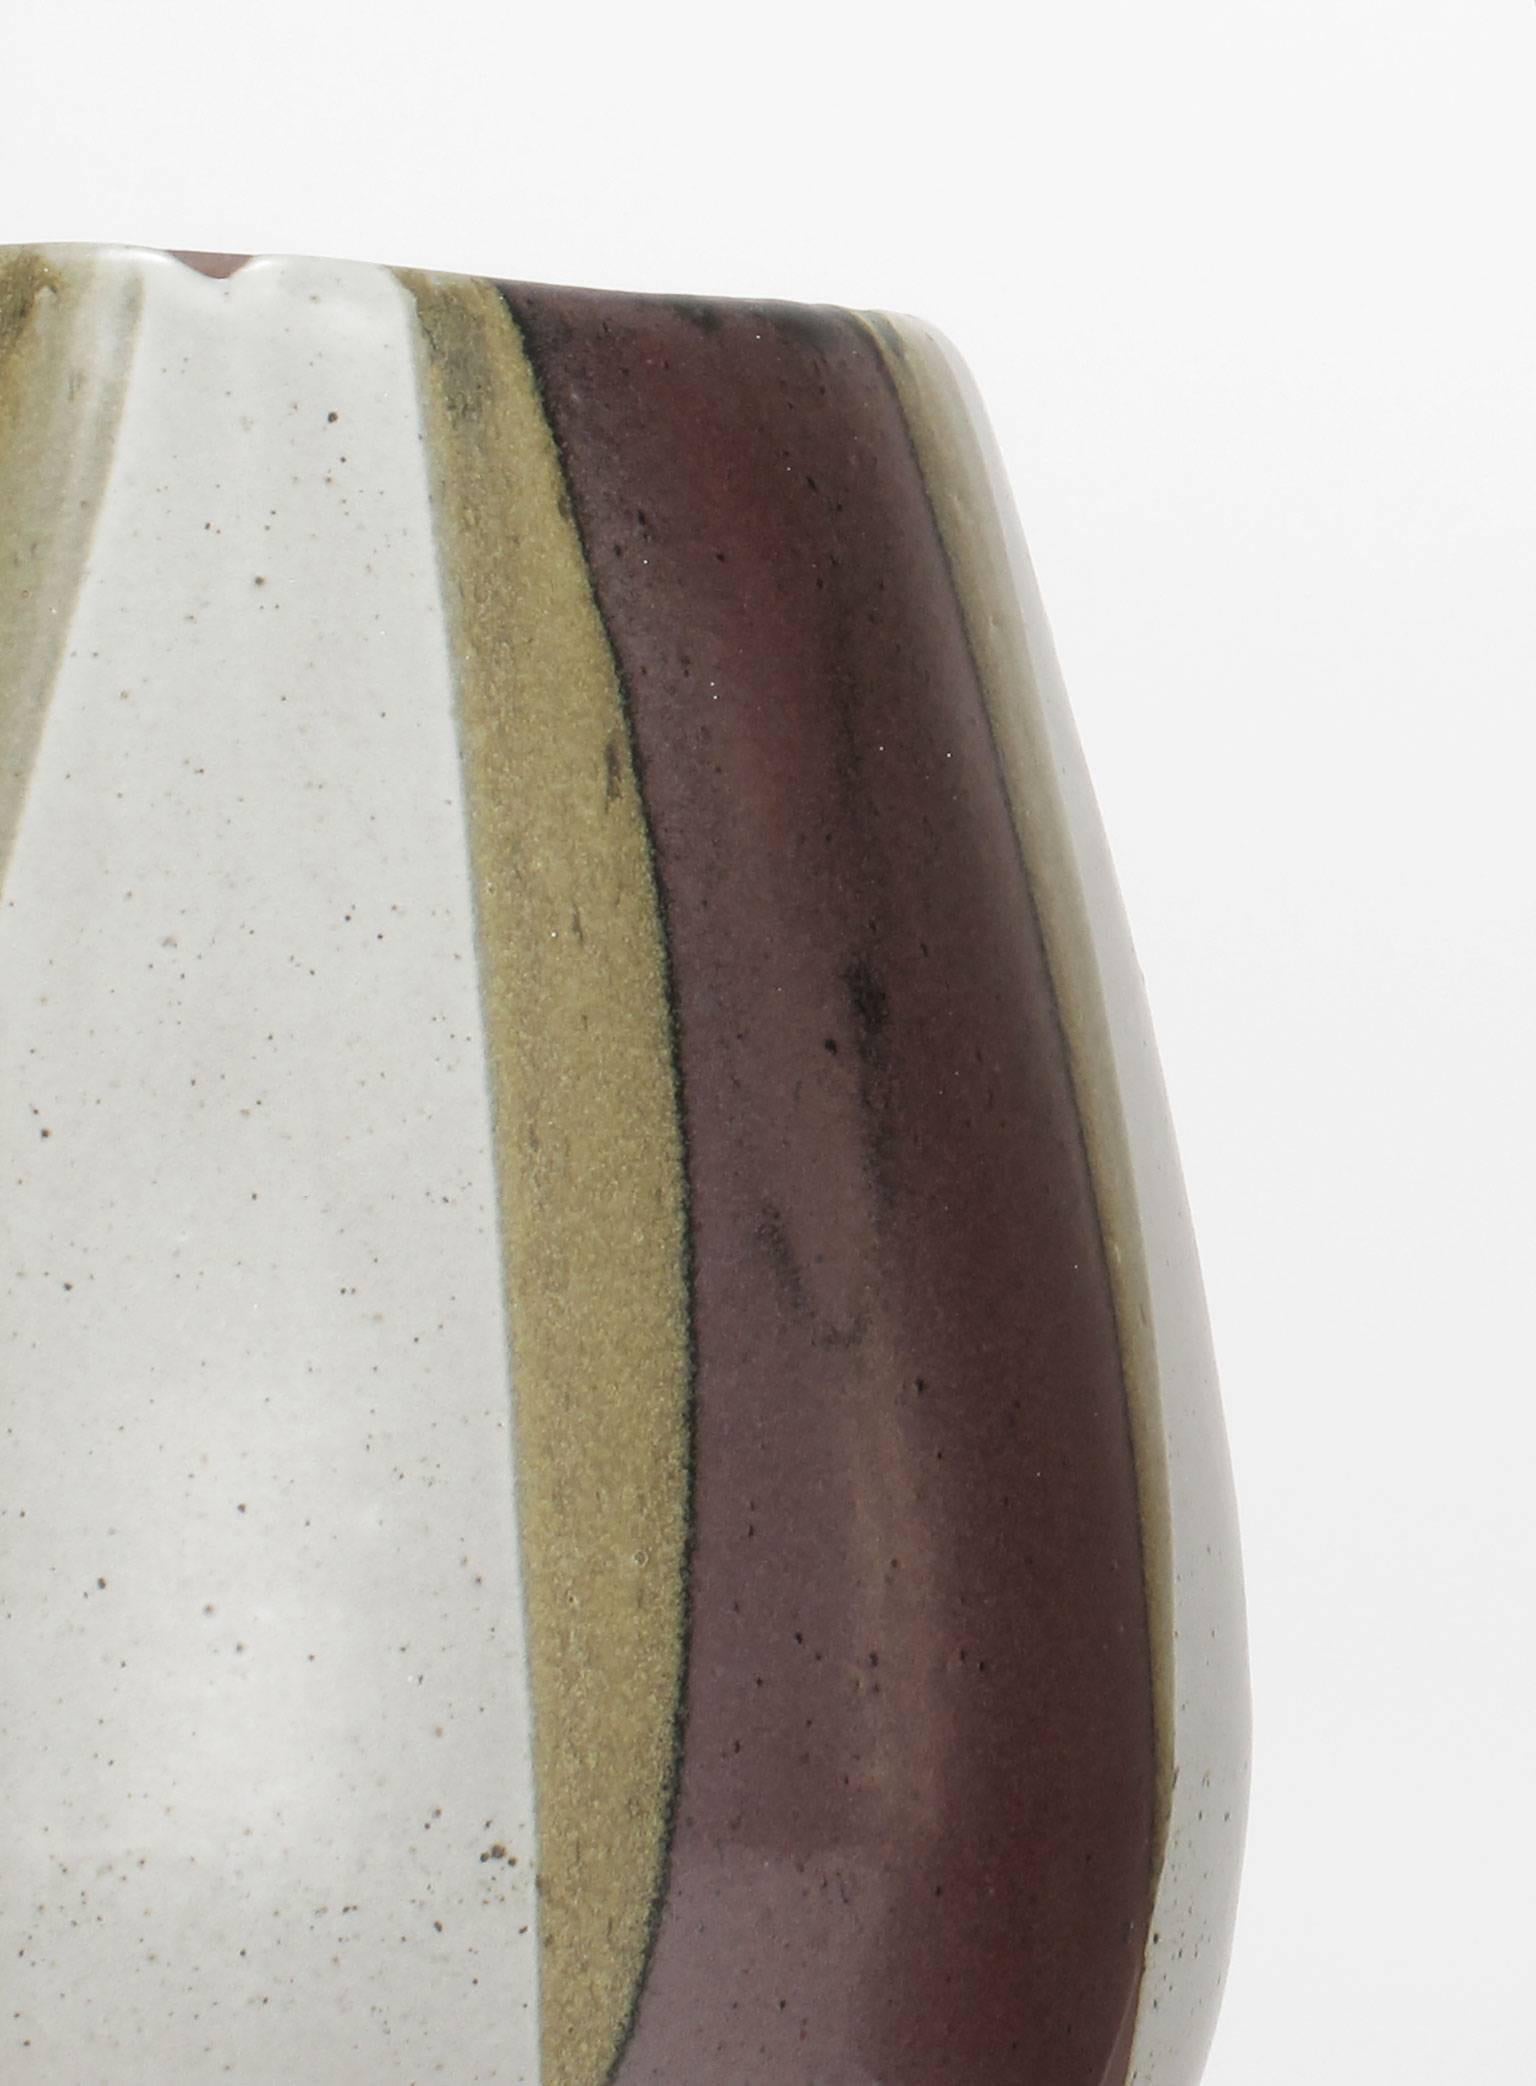 Glazed David Cressey Pro Artisan Collection 'Flame' Glaze Design Ceramic Planter, 1960s For Sale